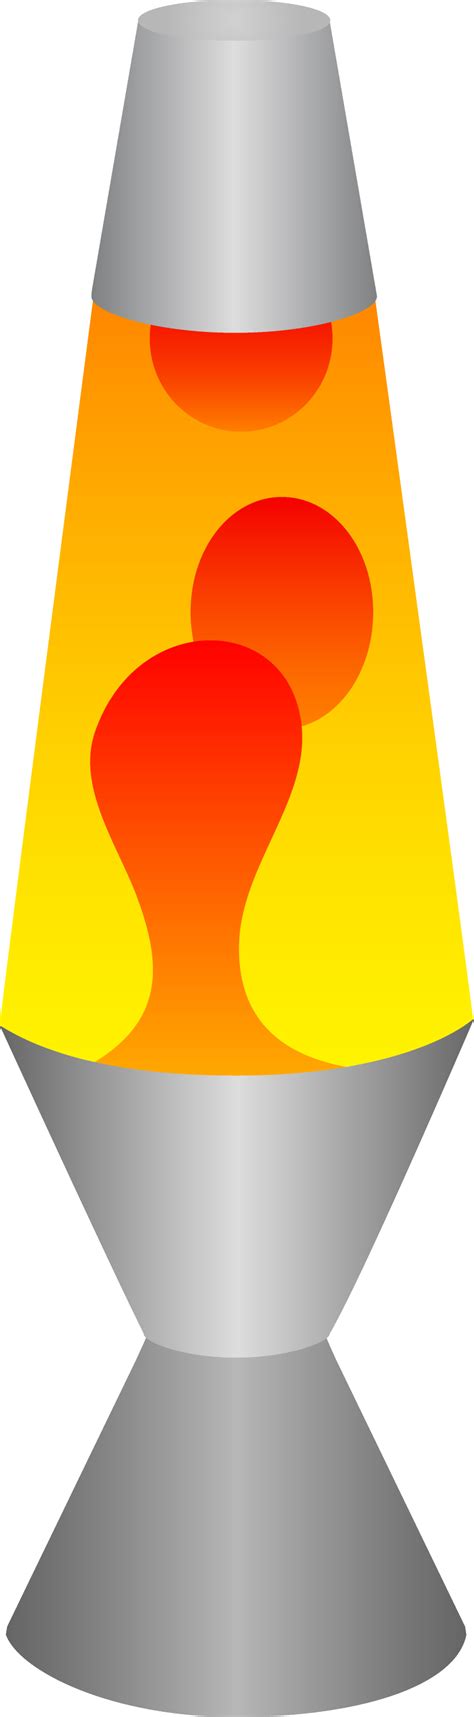 Lava Lamp Png Free Logo Image